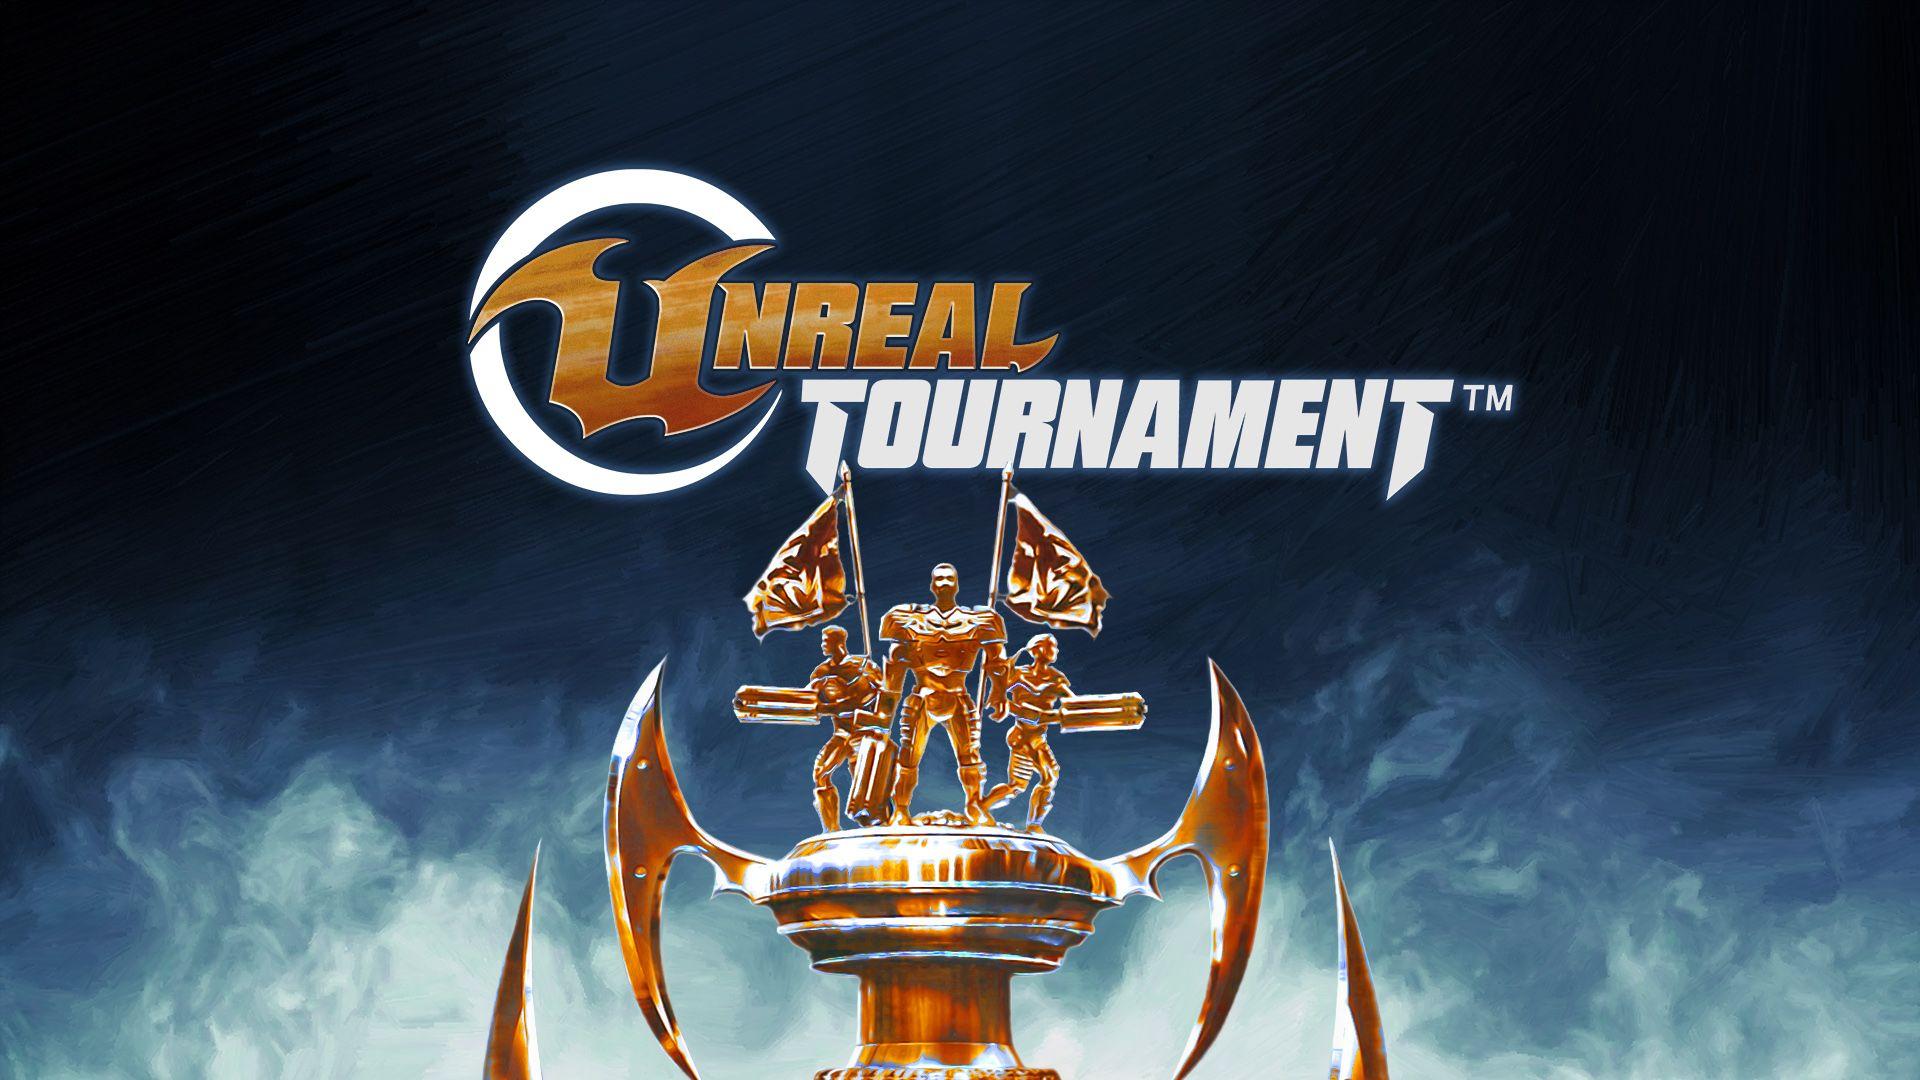 New official logo download & wallpaper Tournament Forums